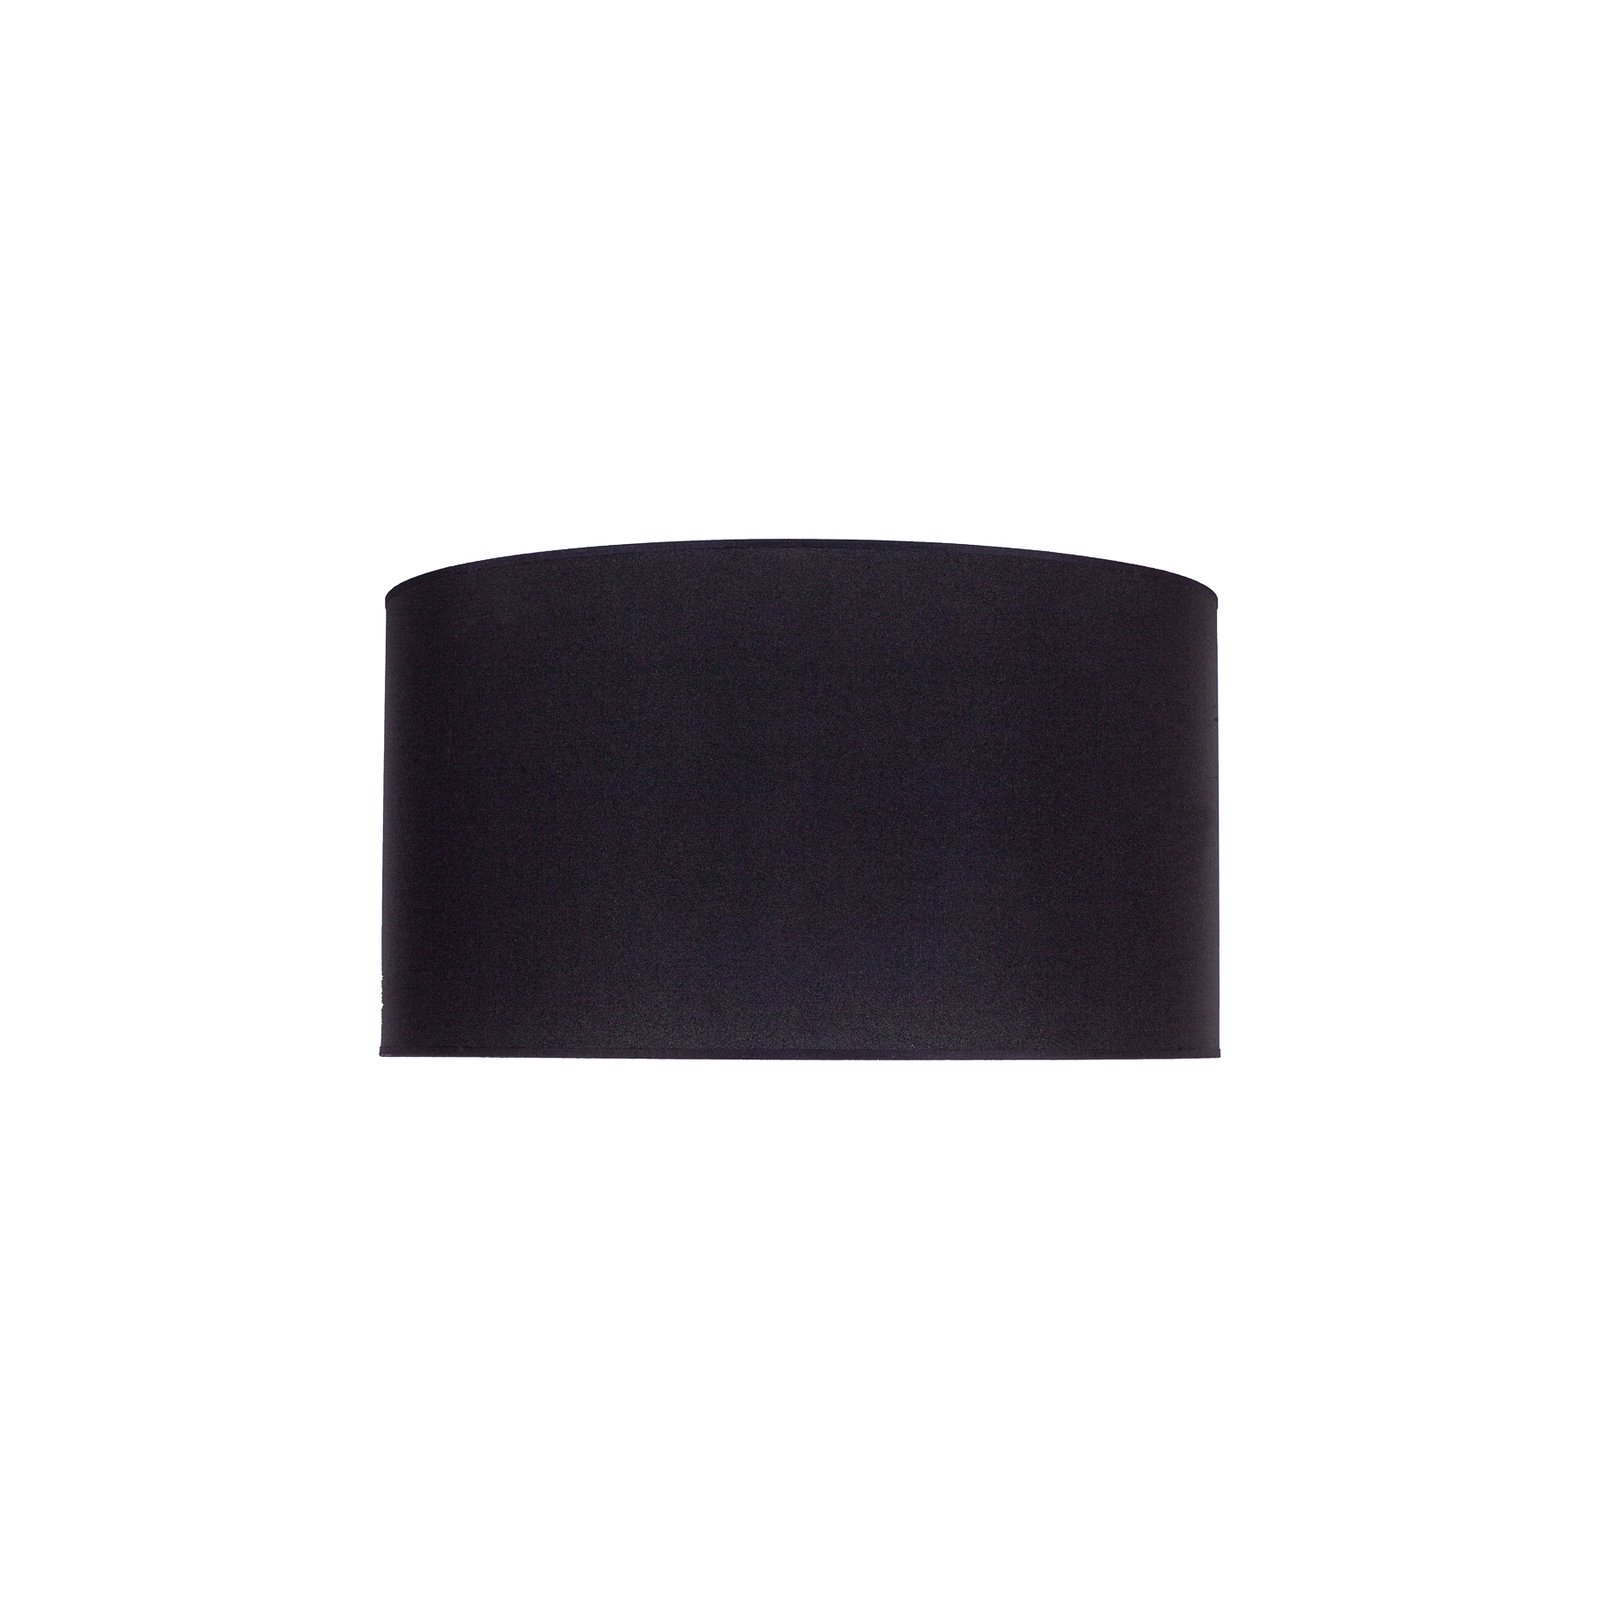 Roller lampshade Ø 40 cm, black